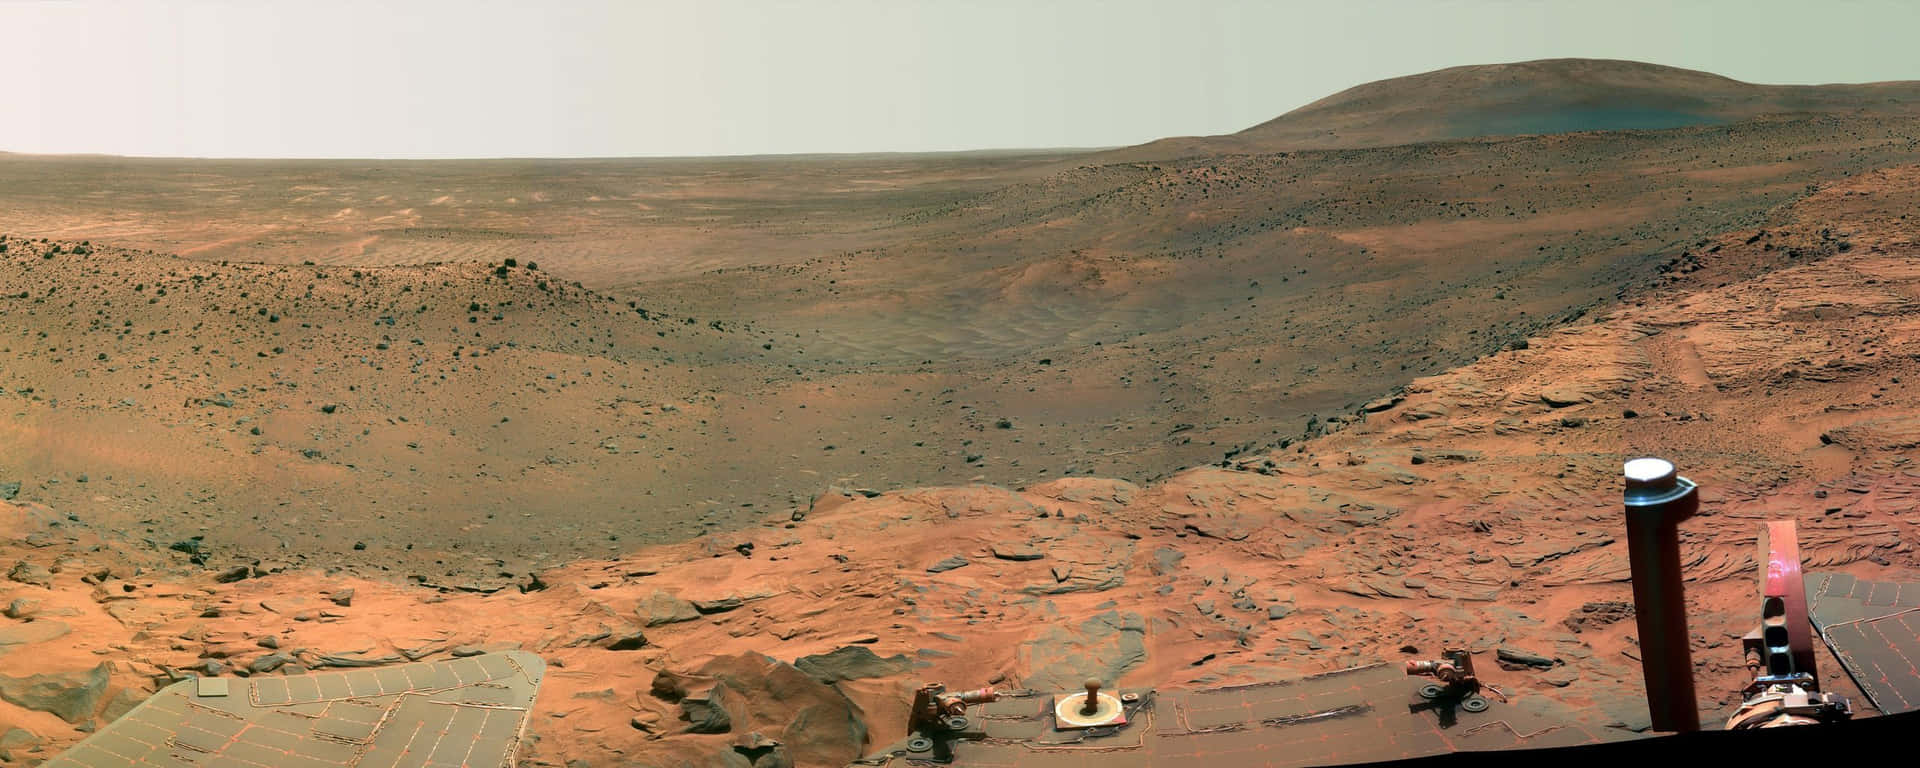 Spectacular Mars Landscape in High Resolution Wallpaper